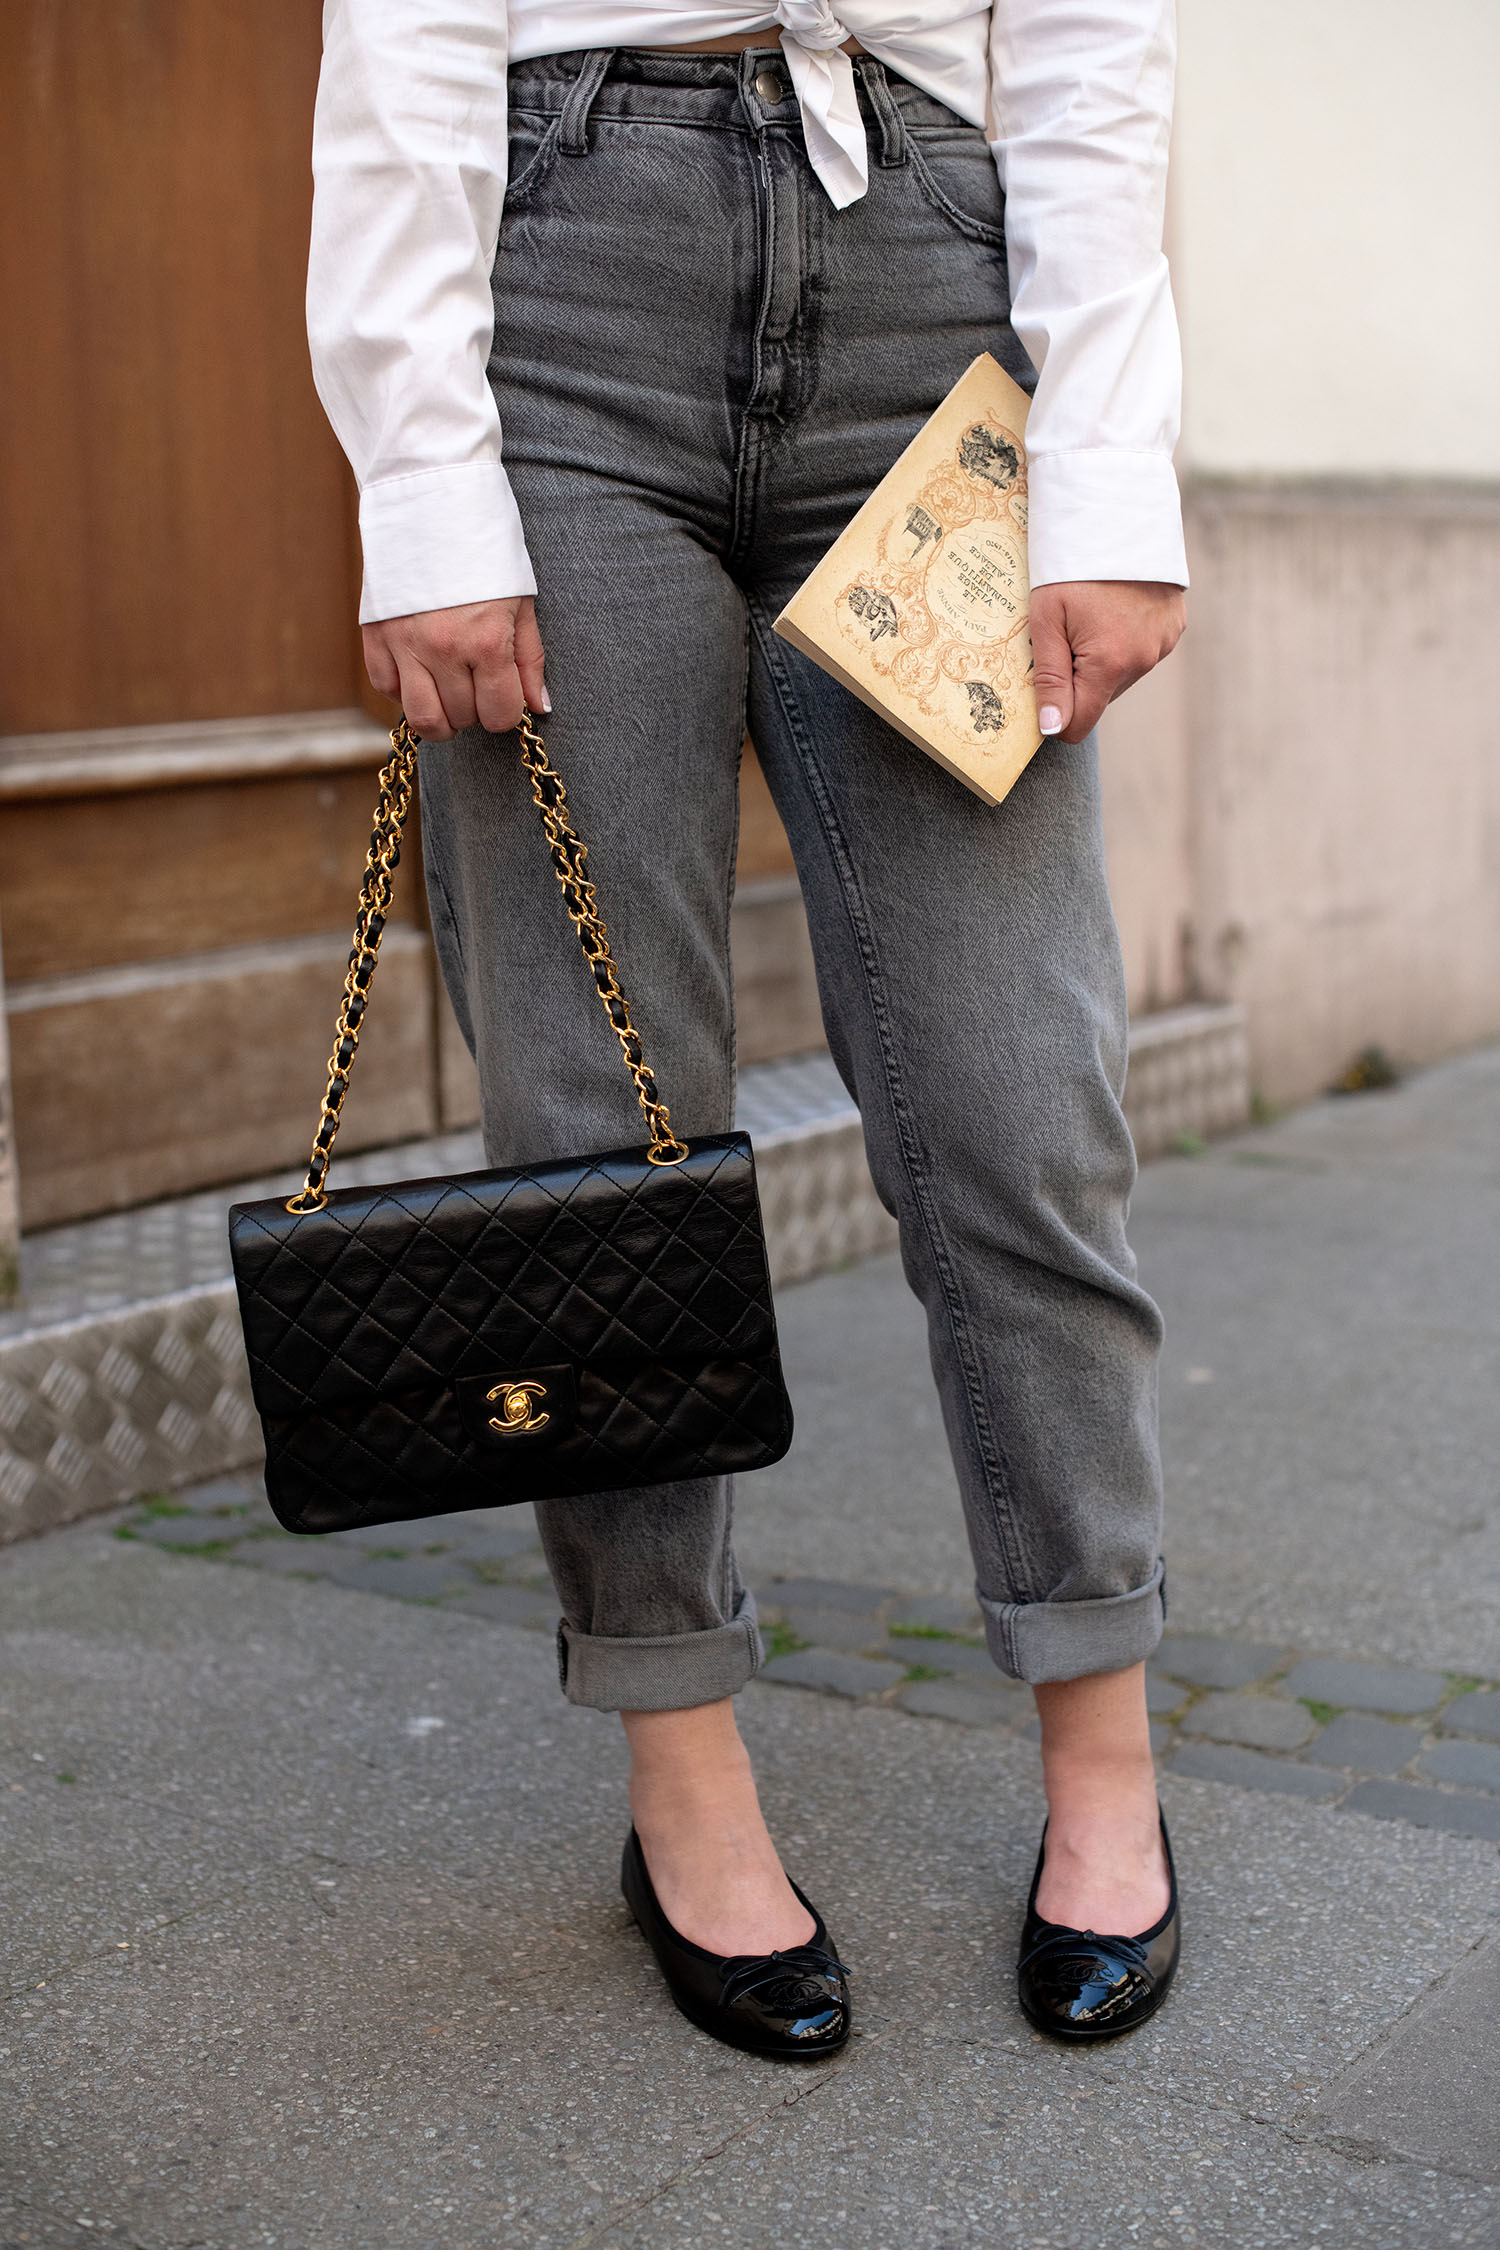 Coco & Voltaire - Chanel double flap handbag, Zara jeans, Chanel flats